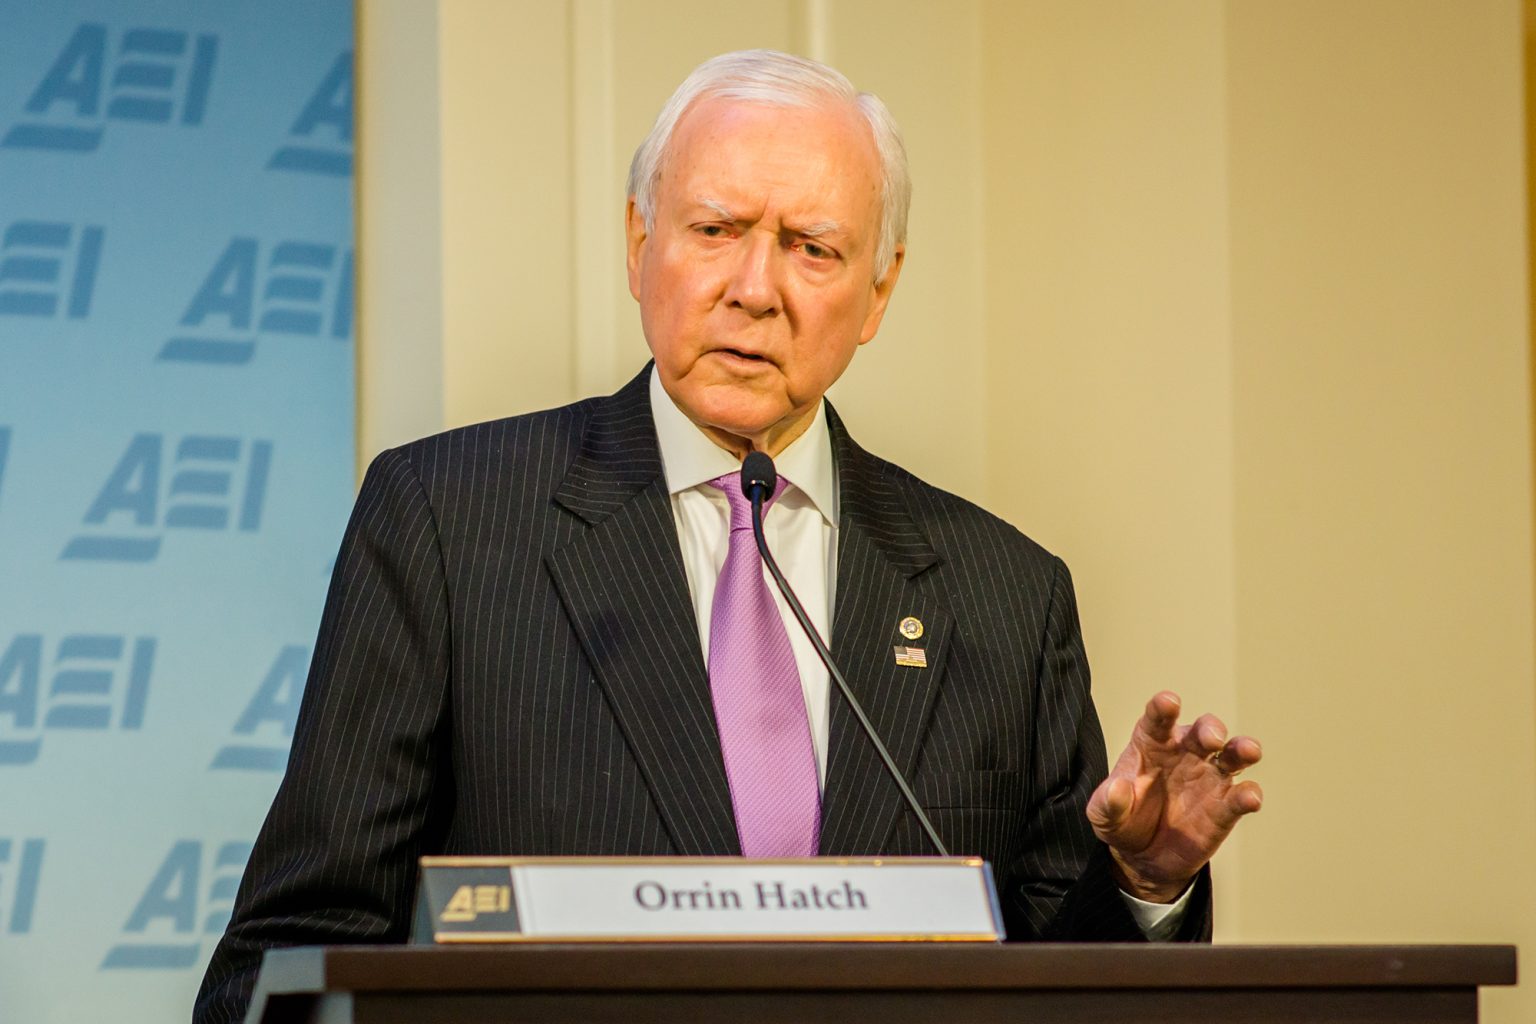 Utah Senator Orrin Hatch speaks at the American Enterprise Institute about international trade policy